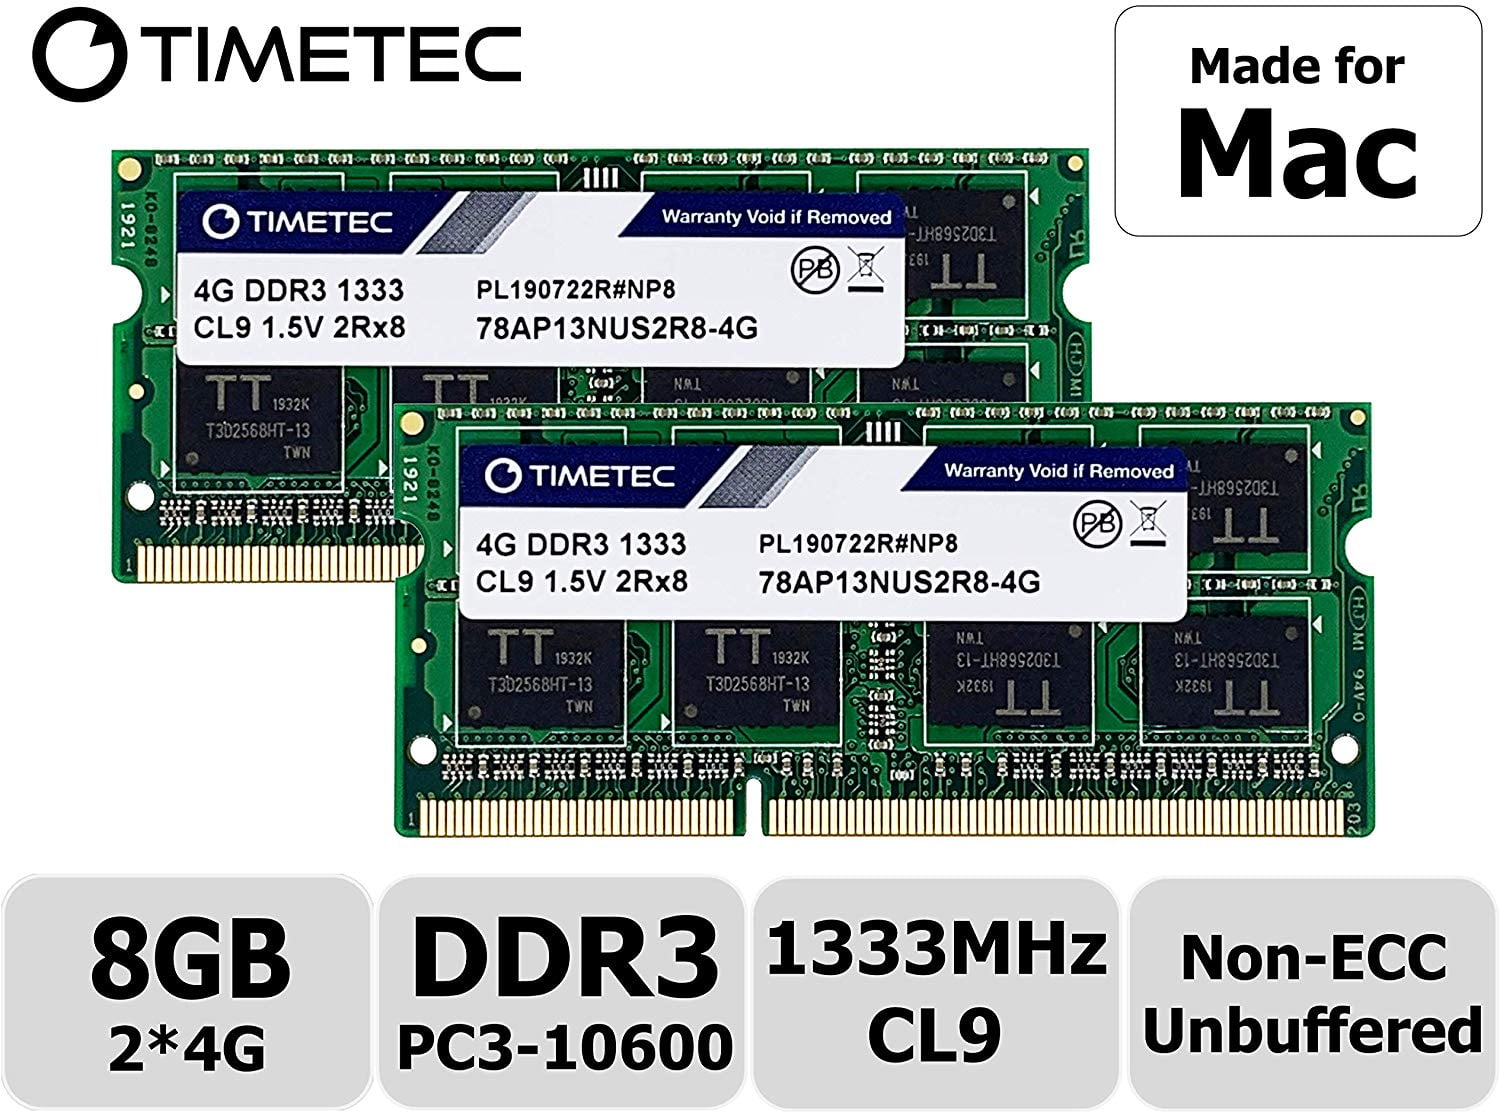 2x4GB DDR3 1333MHz PC3-10600 SODIMM Memory Upgrade For MacBook Pro/iMac/Mac mini Timetec Hynix IC compatible with Apple 8GB Kit